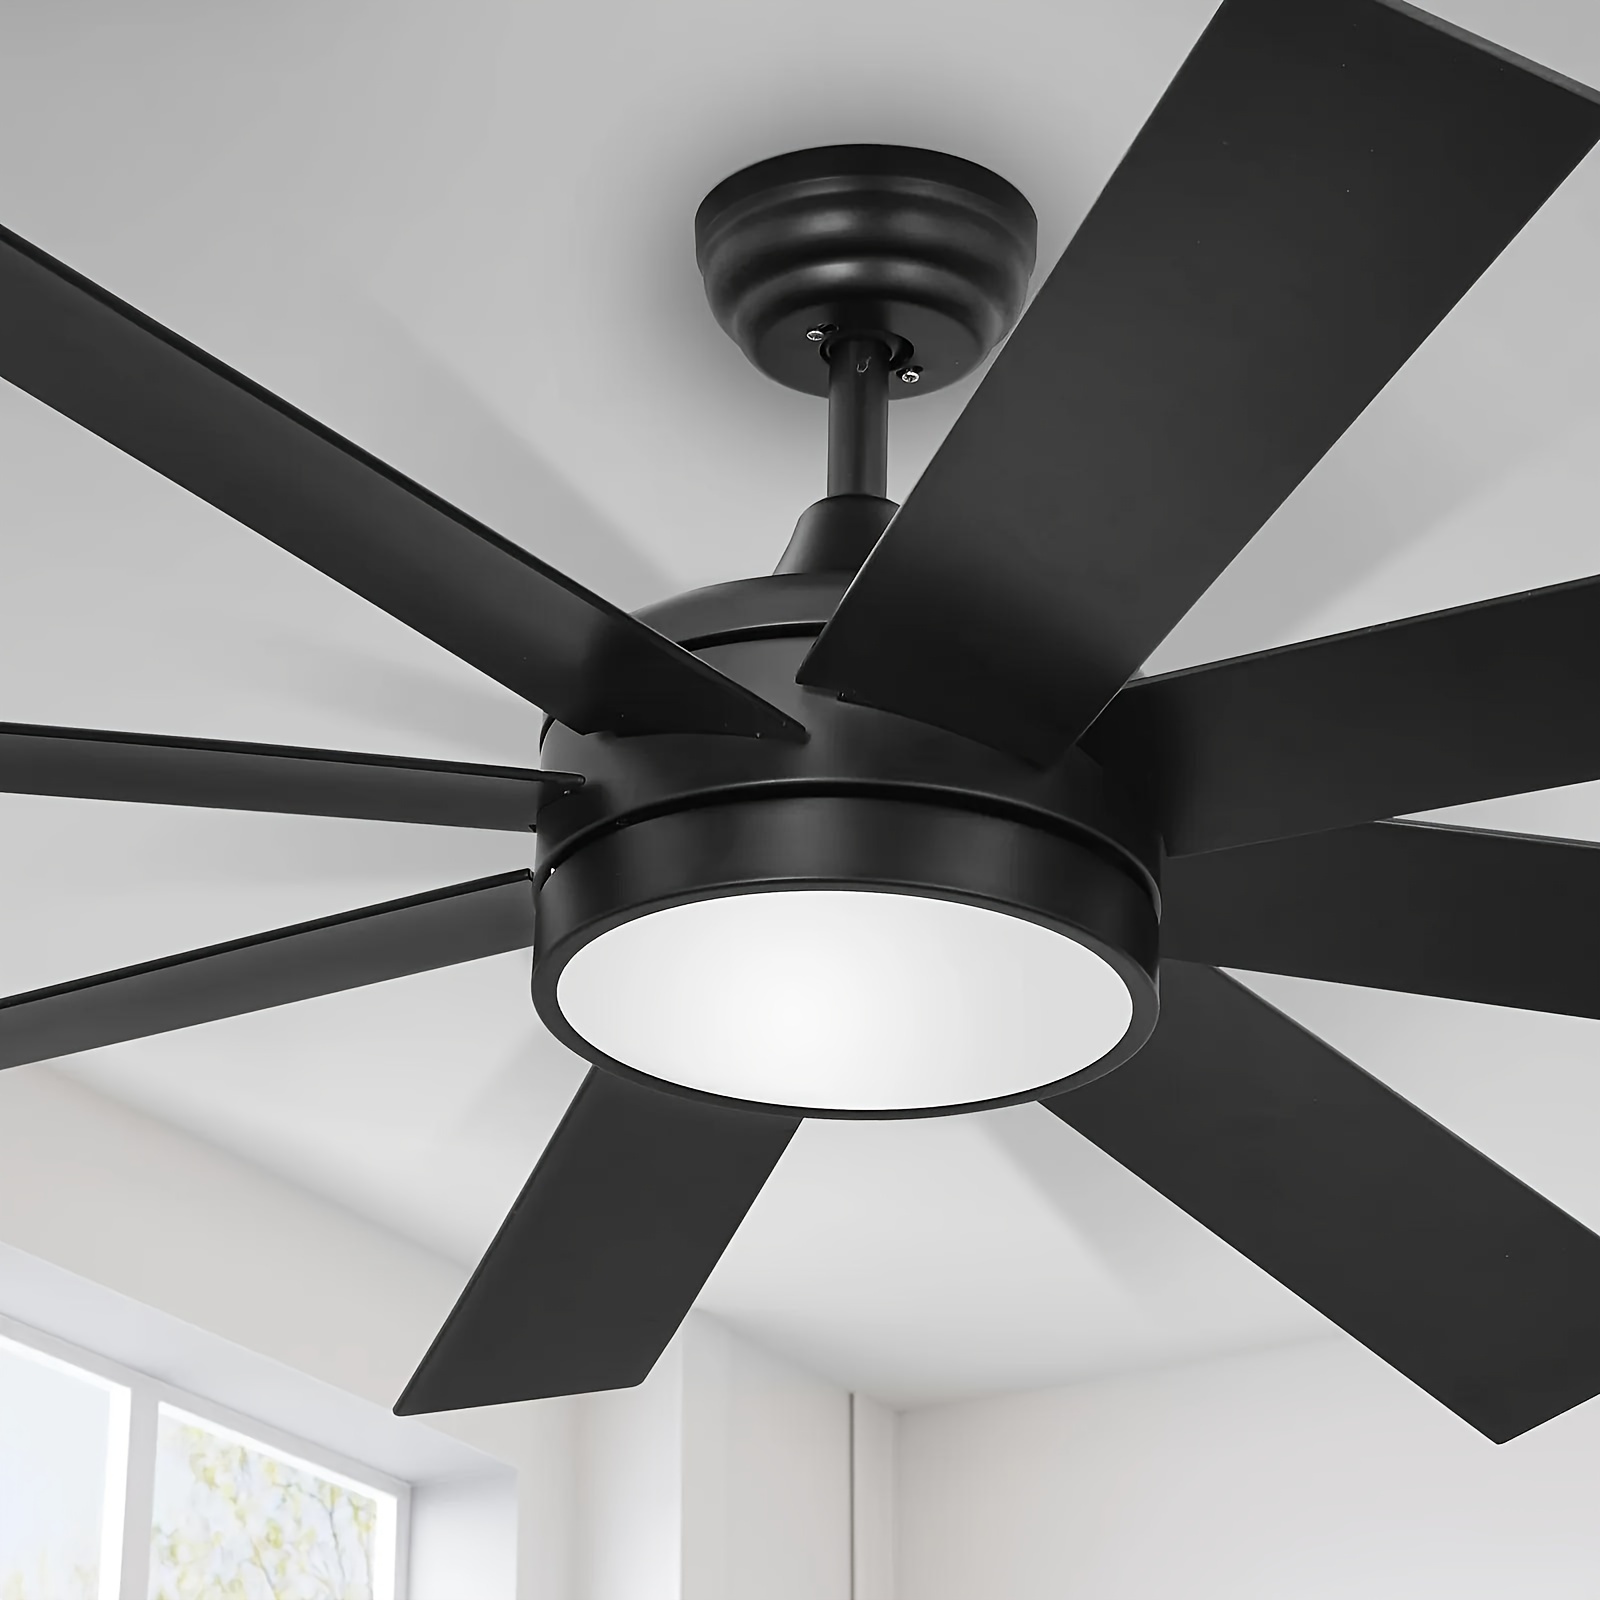 

Yardbliss Home Ceiling Fan Light & Remote Control Led Chandelier Lamp 60 Inch